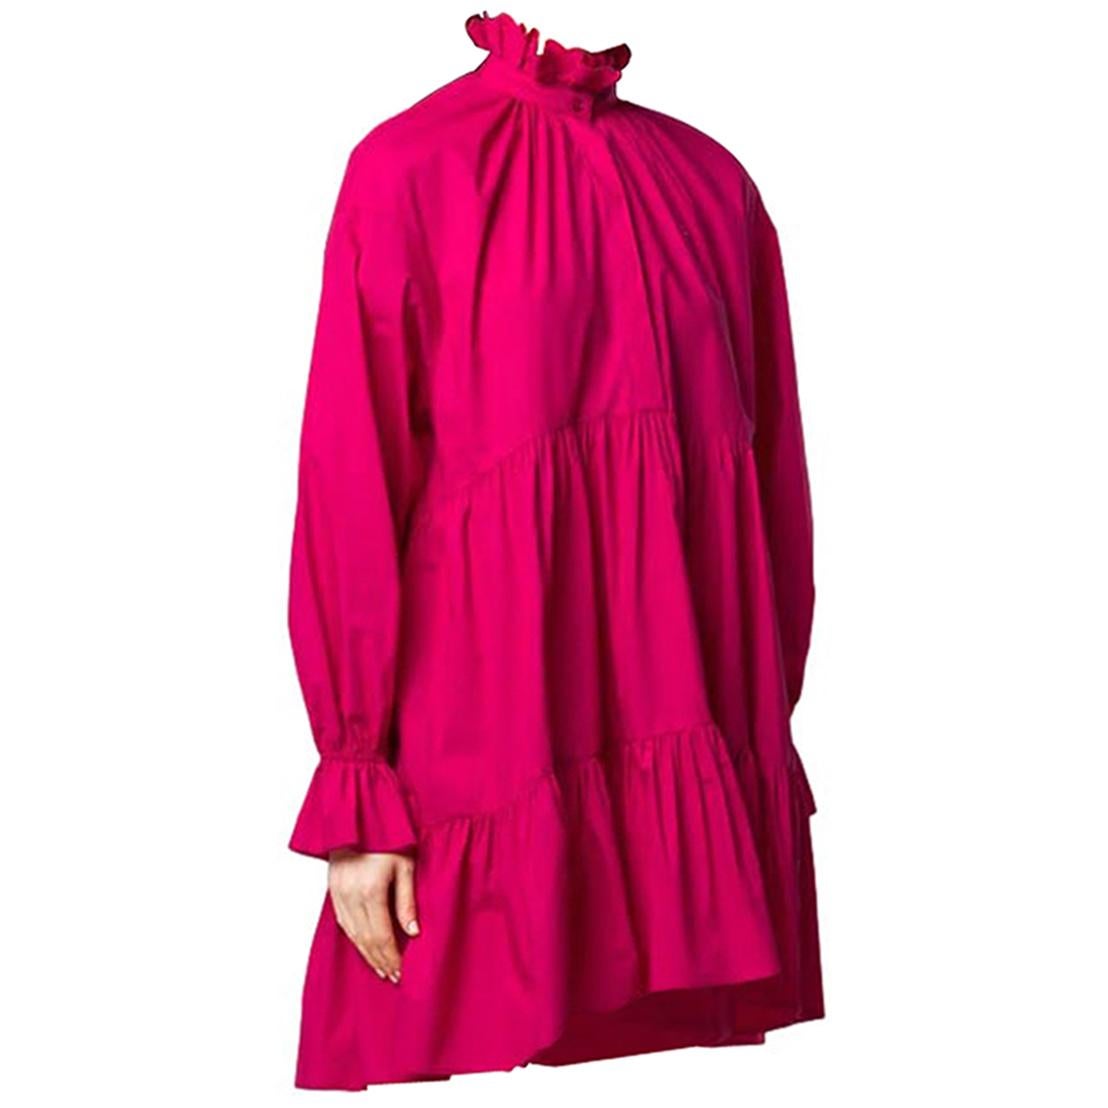  Philosophy Di Lorenzo Serafini Pink Long Sleeve Ruffle Dress - Size US 6